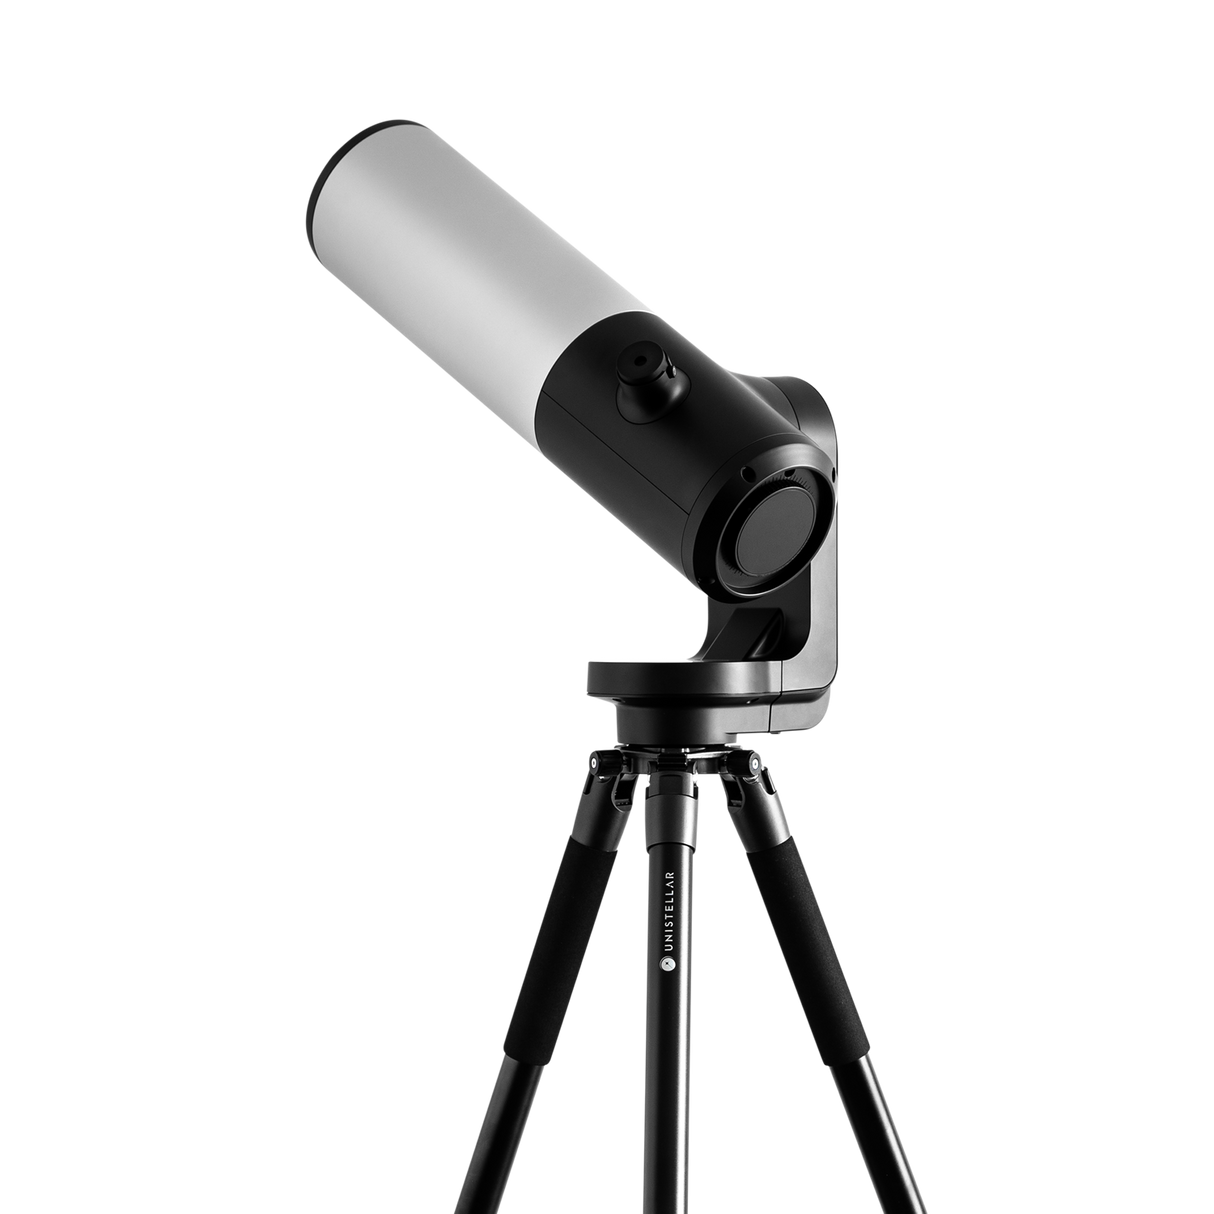 Bundle Unistellar eVscope 2 - smartes Teleskop + Rucksack